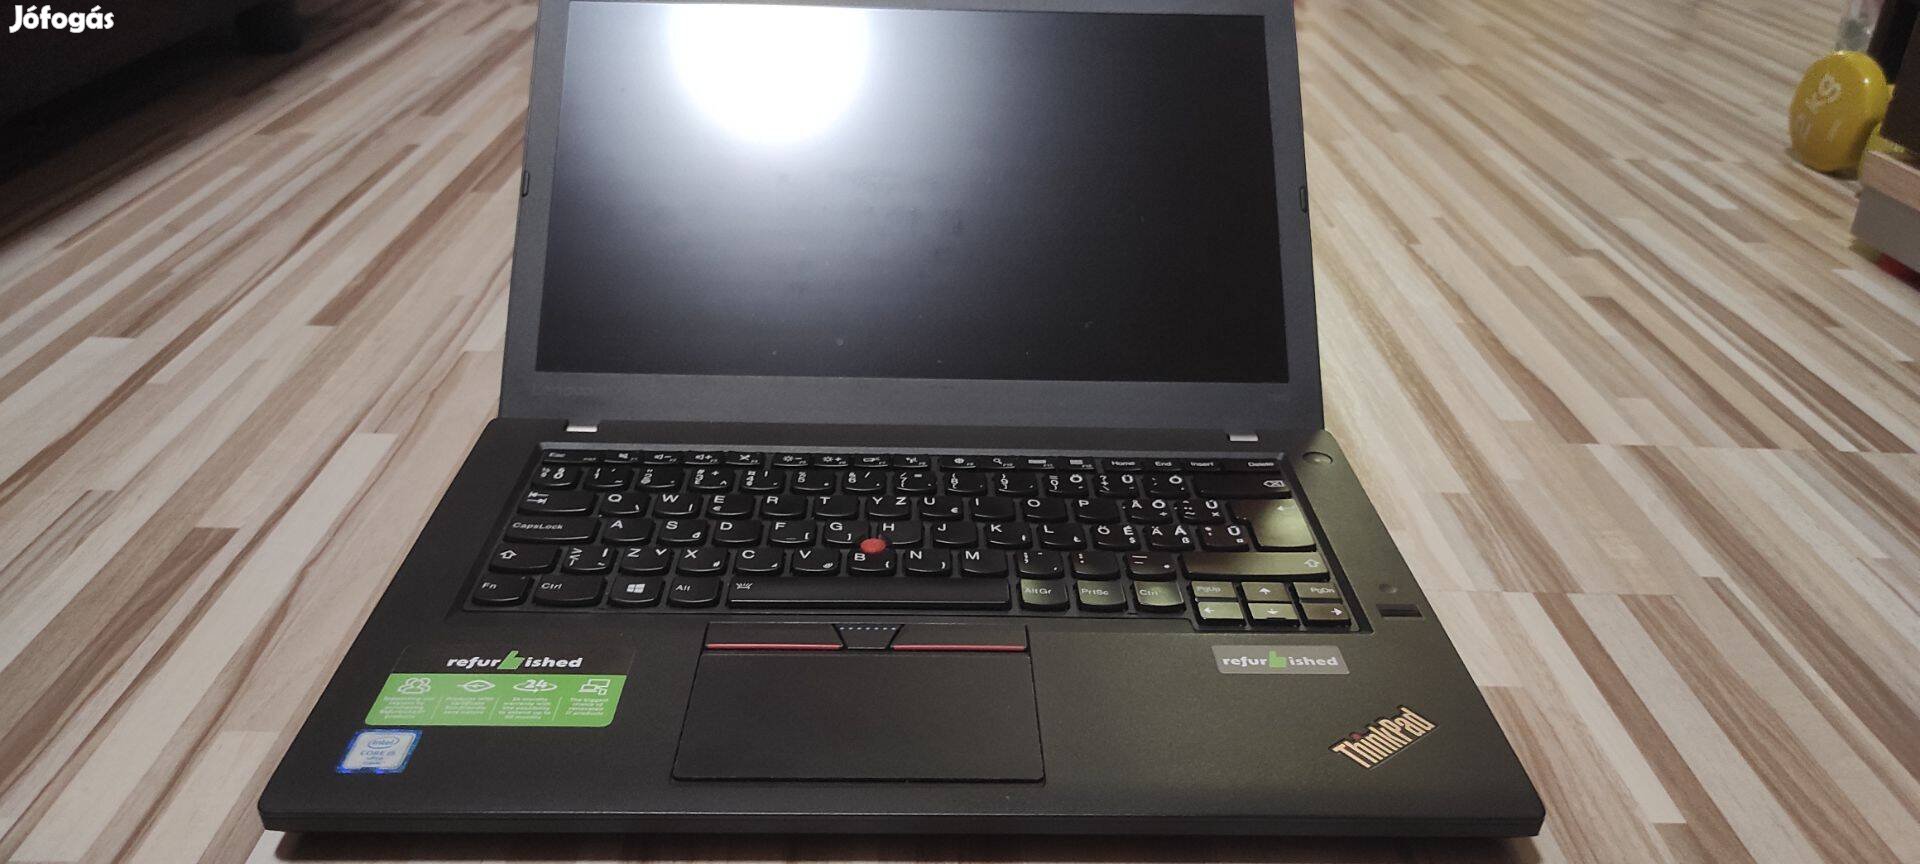 Lenovo T460 laptop notebook